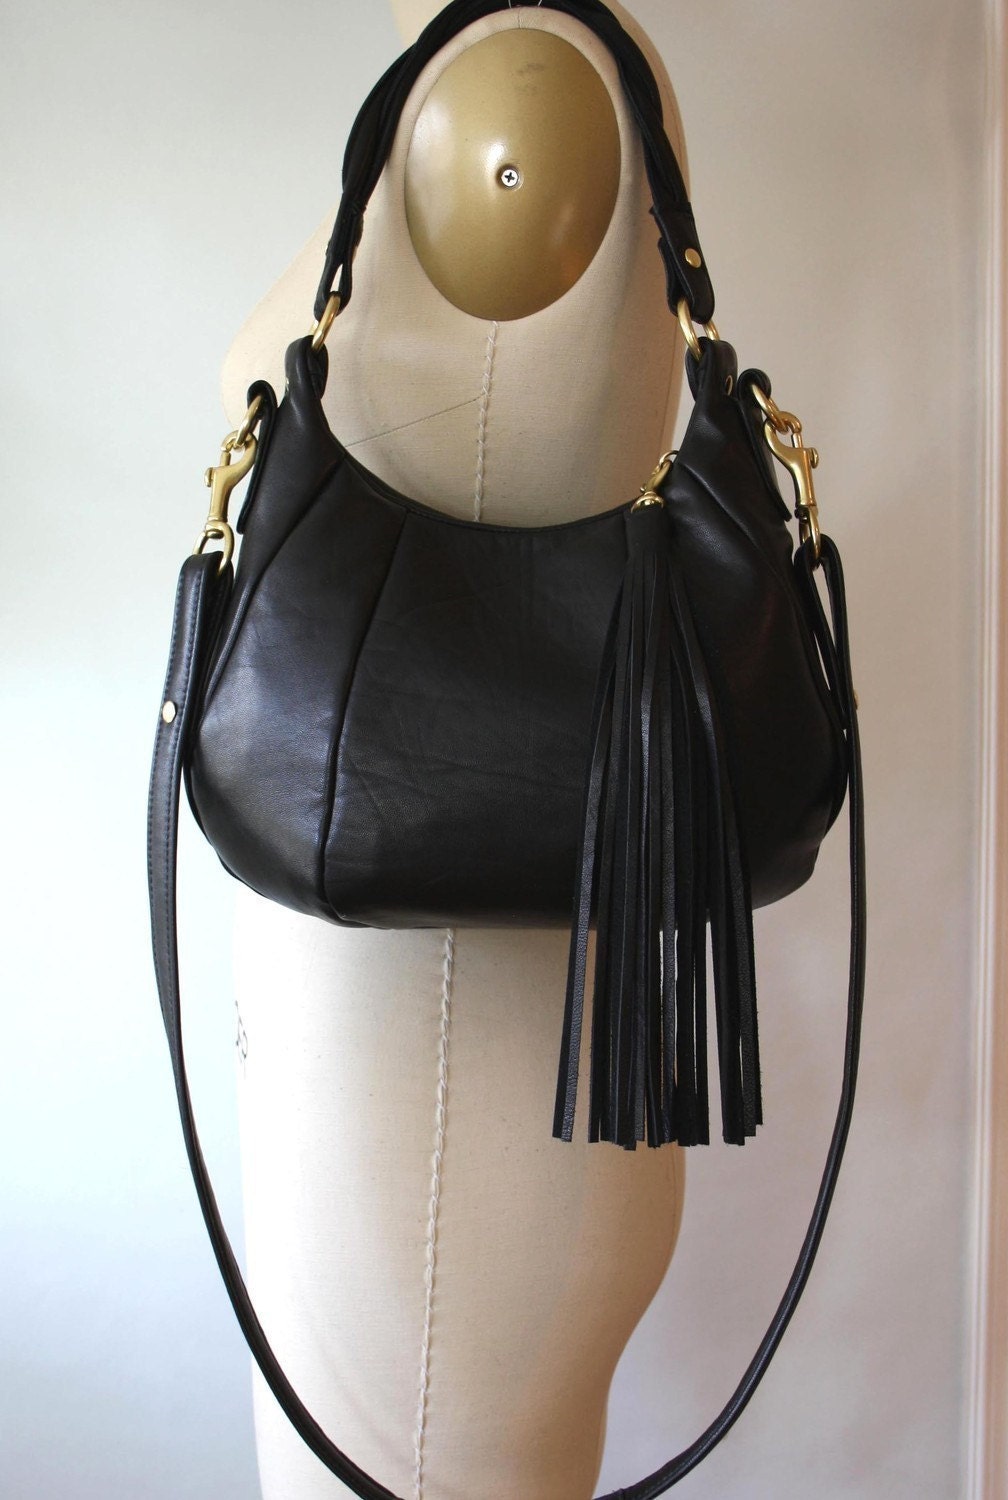 OPELLE Baby Ballet Bag - Black glossy Lambskin w tassel and twist strap - Ready to Ship